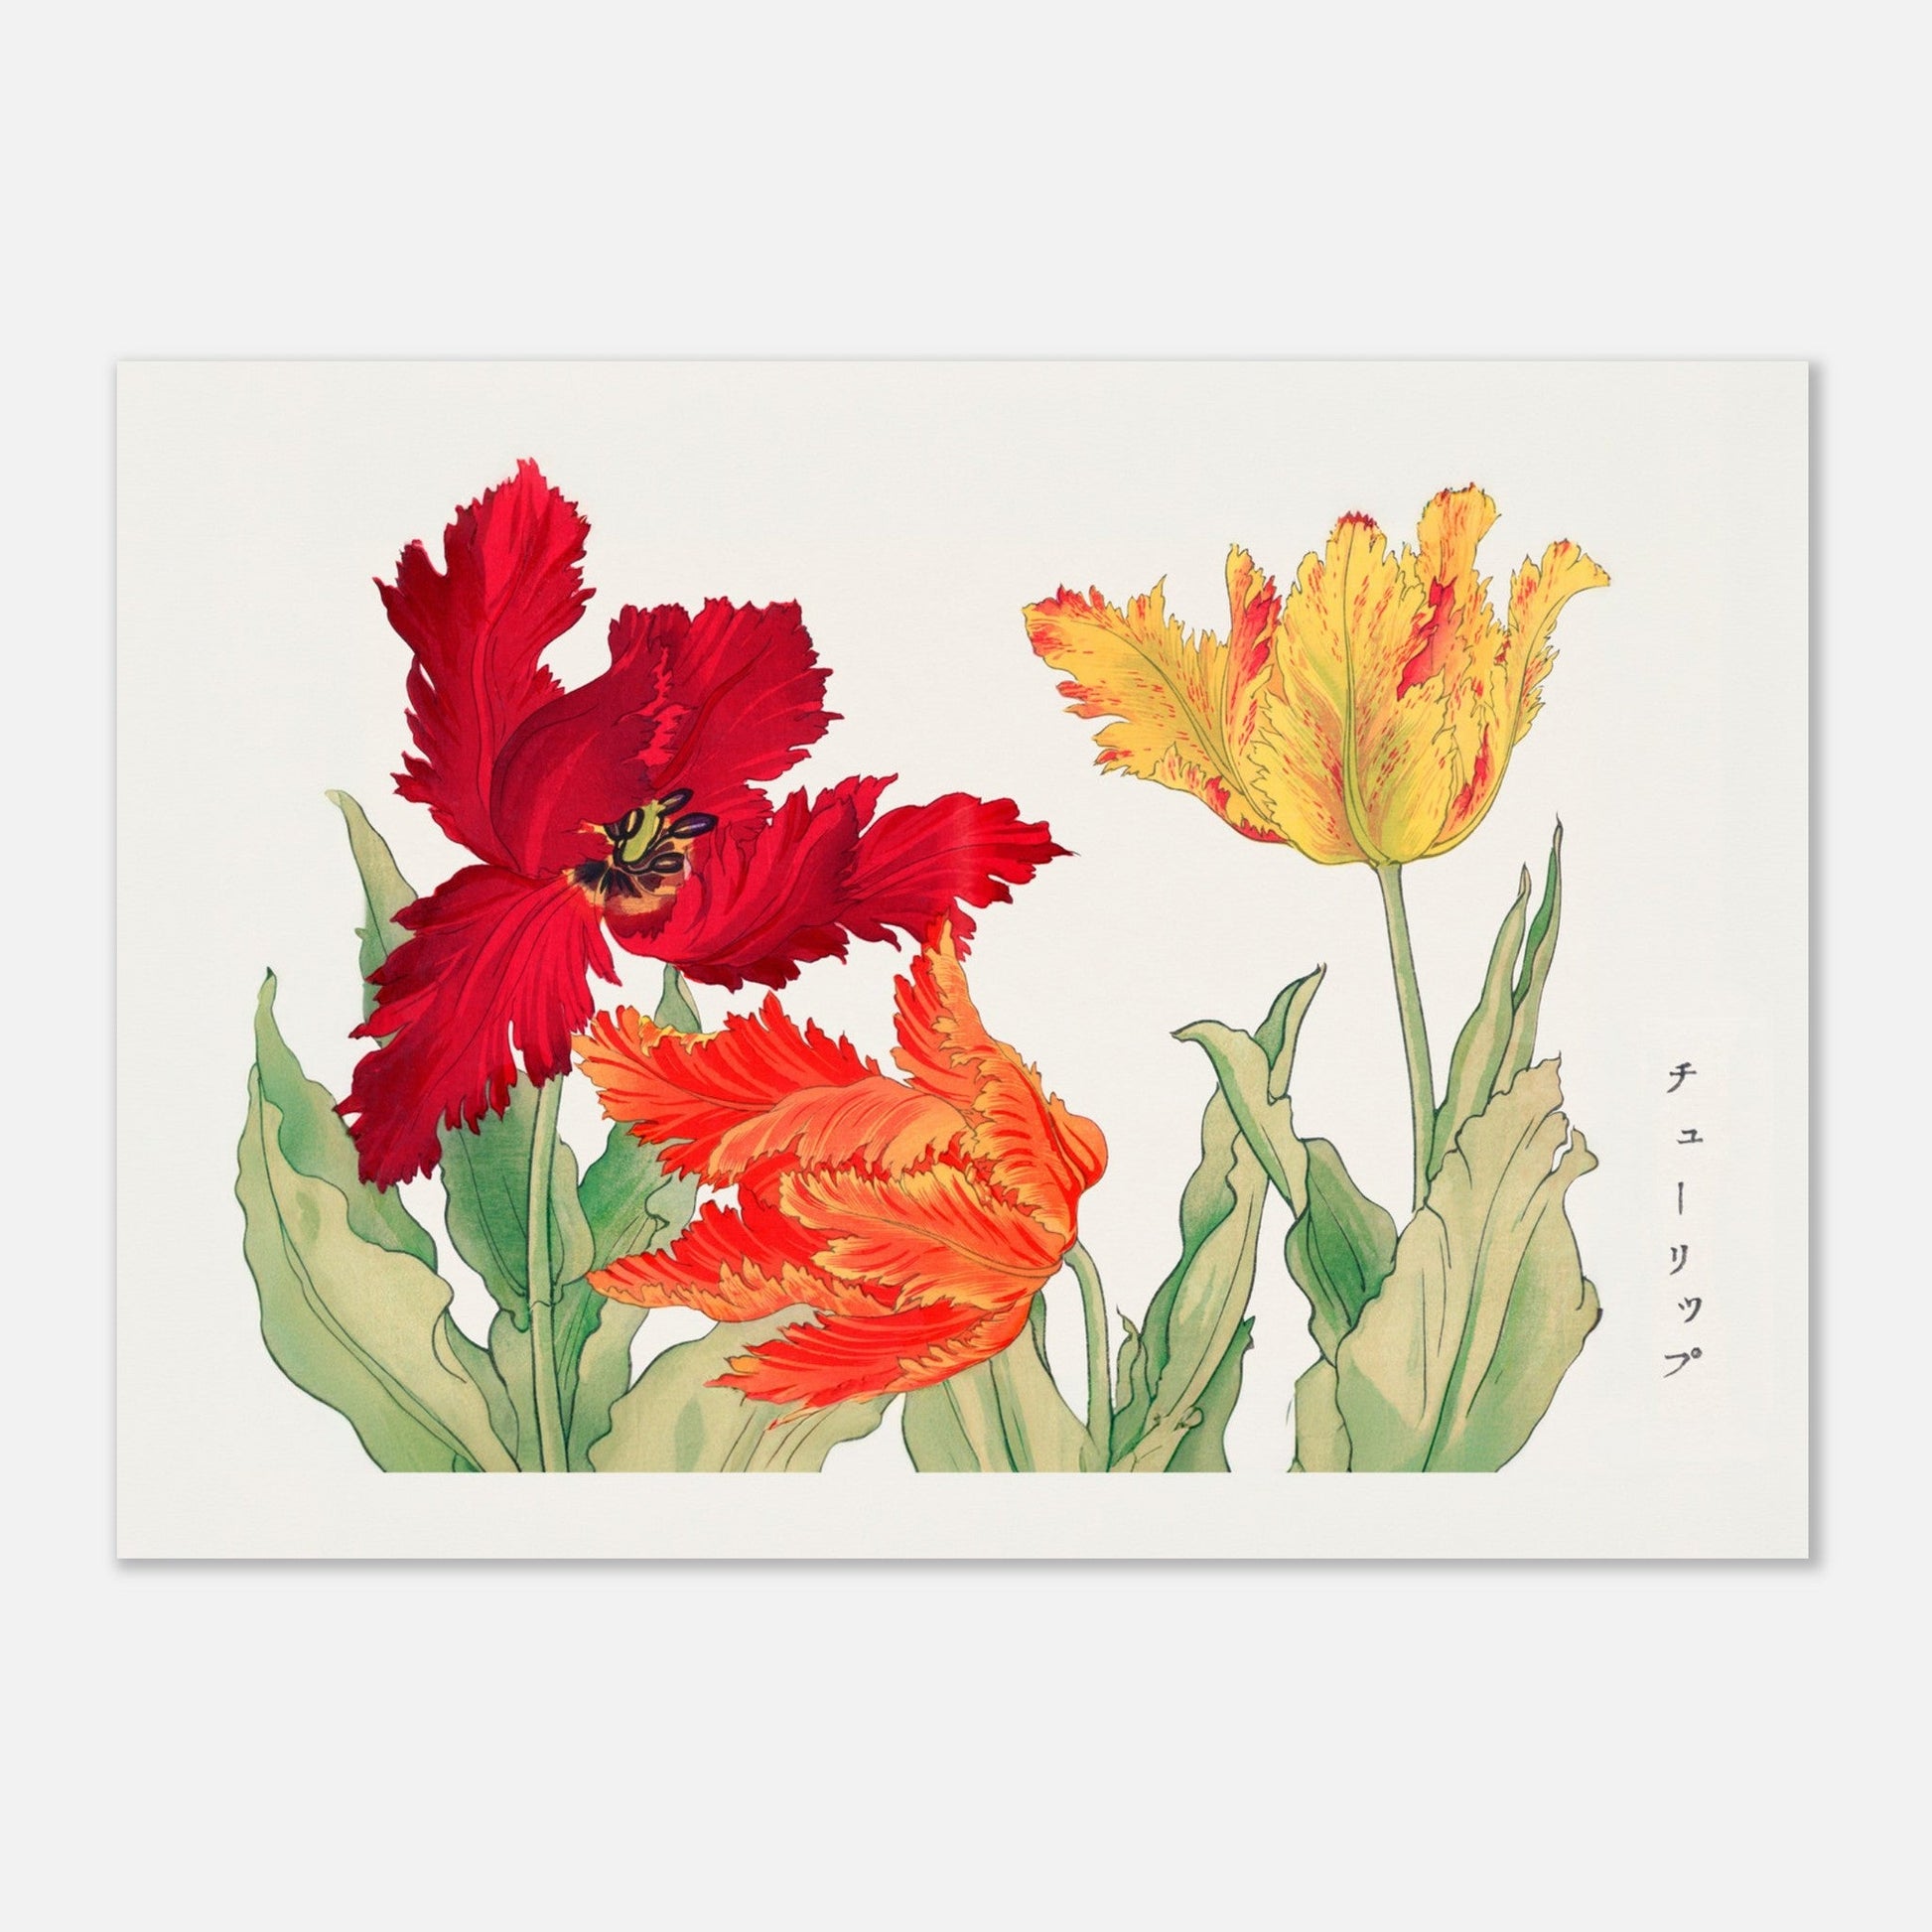 Tulips - Vintage Japanese Illustration, Japanese Illustration, Tulips, vintage floral art print, #illieeart